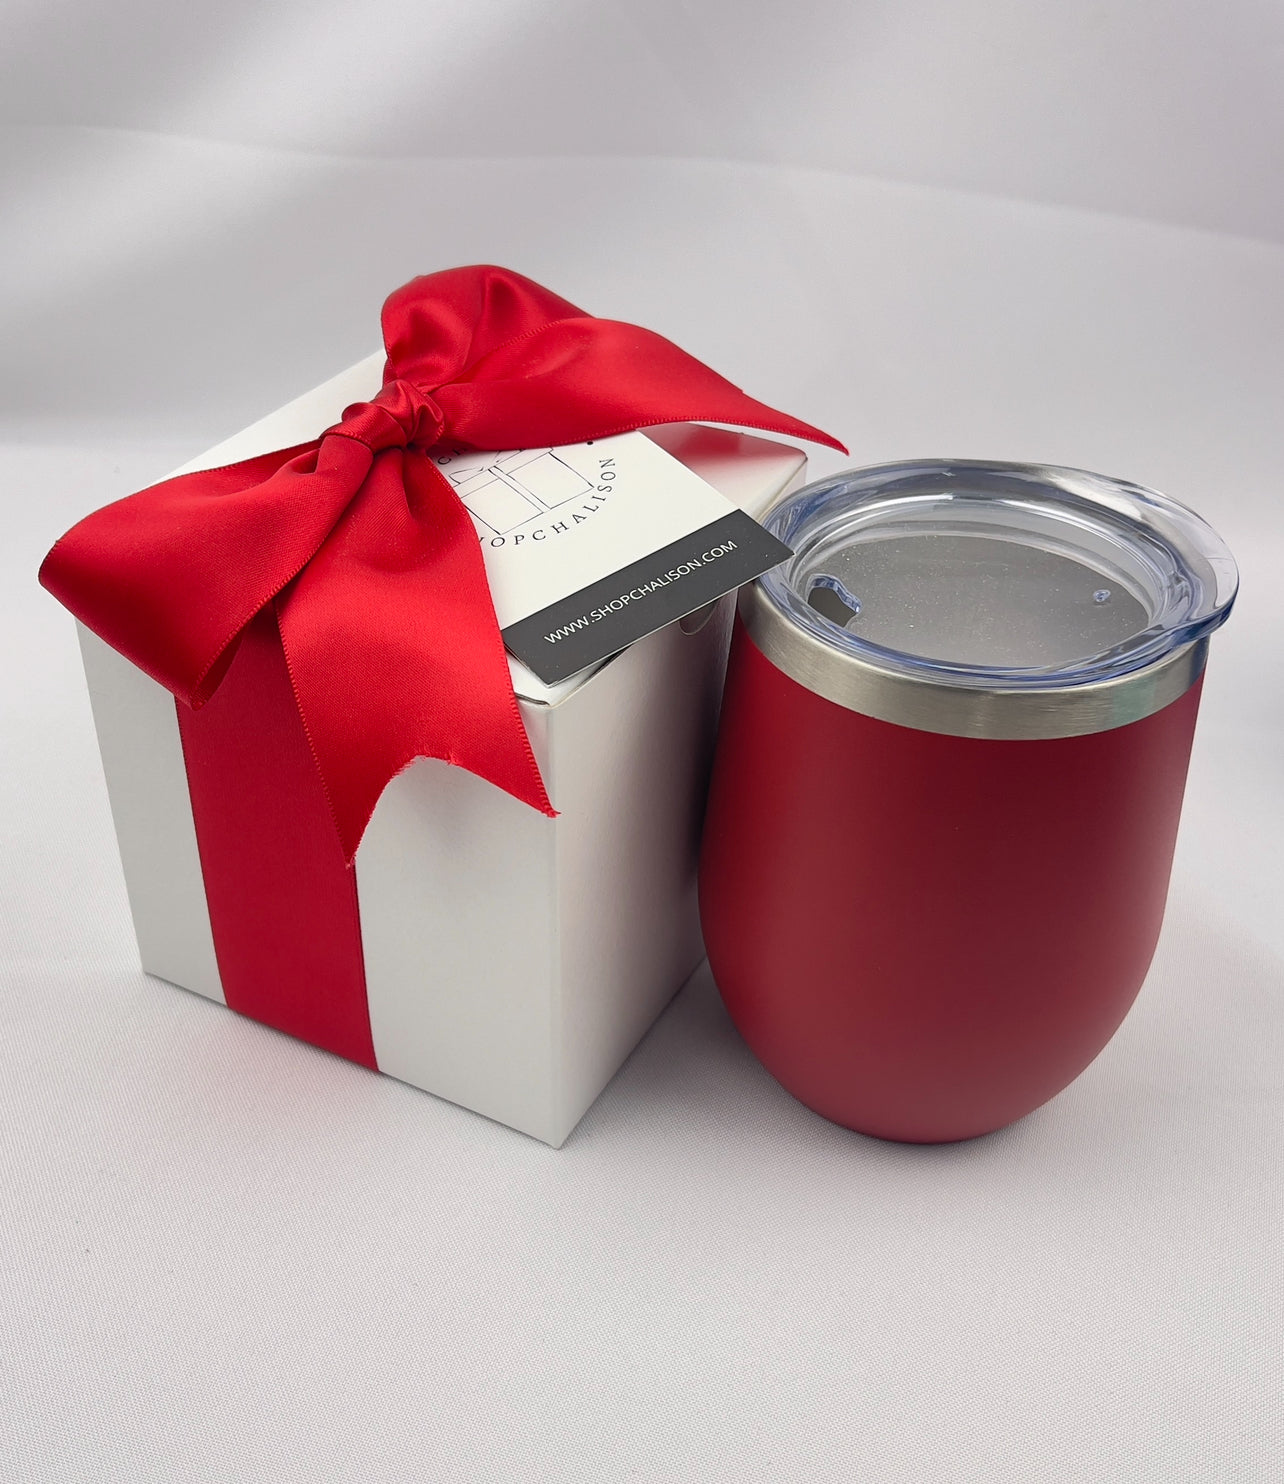 Customized Tumbler Gift Box - Red